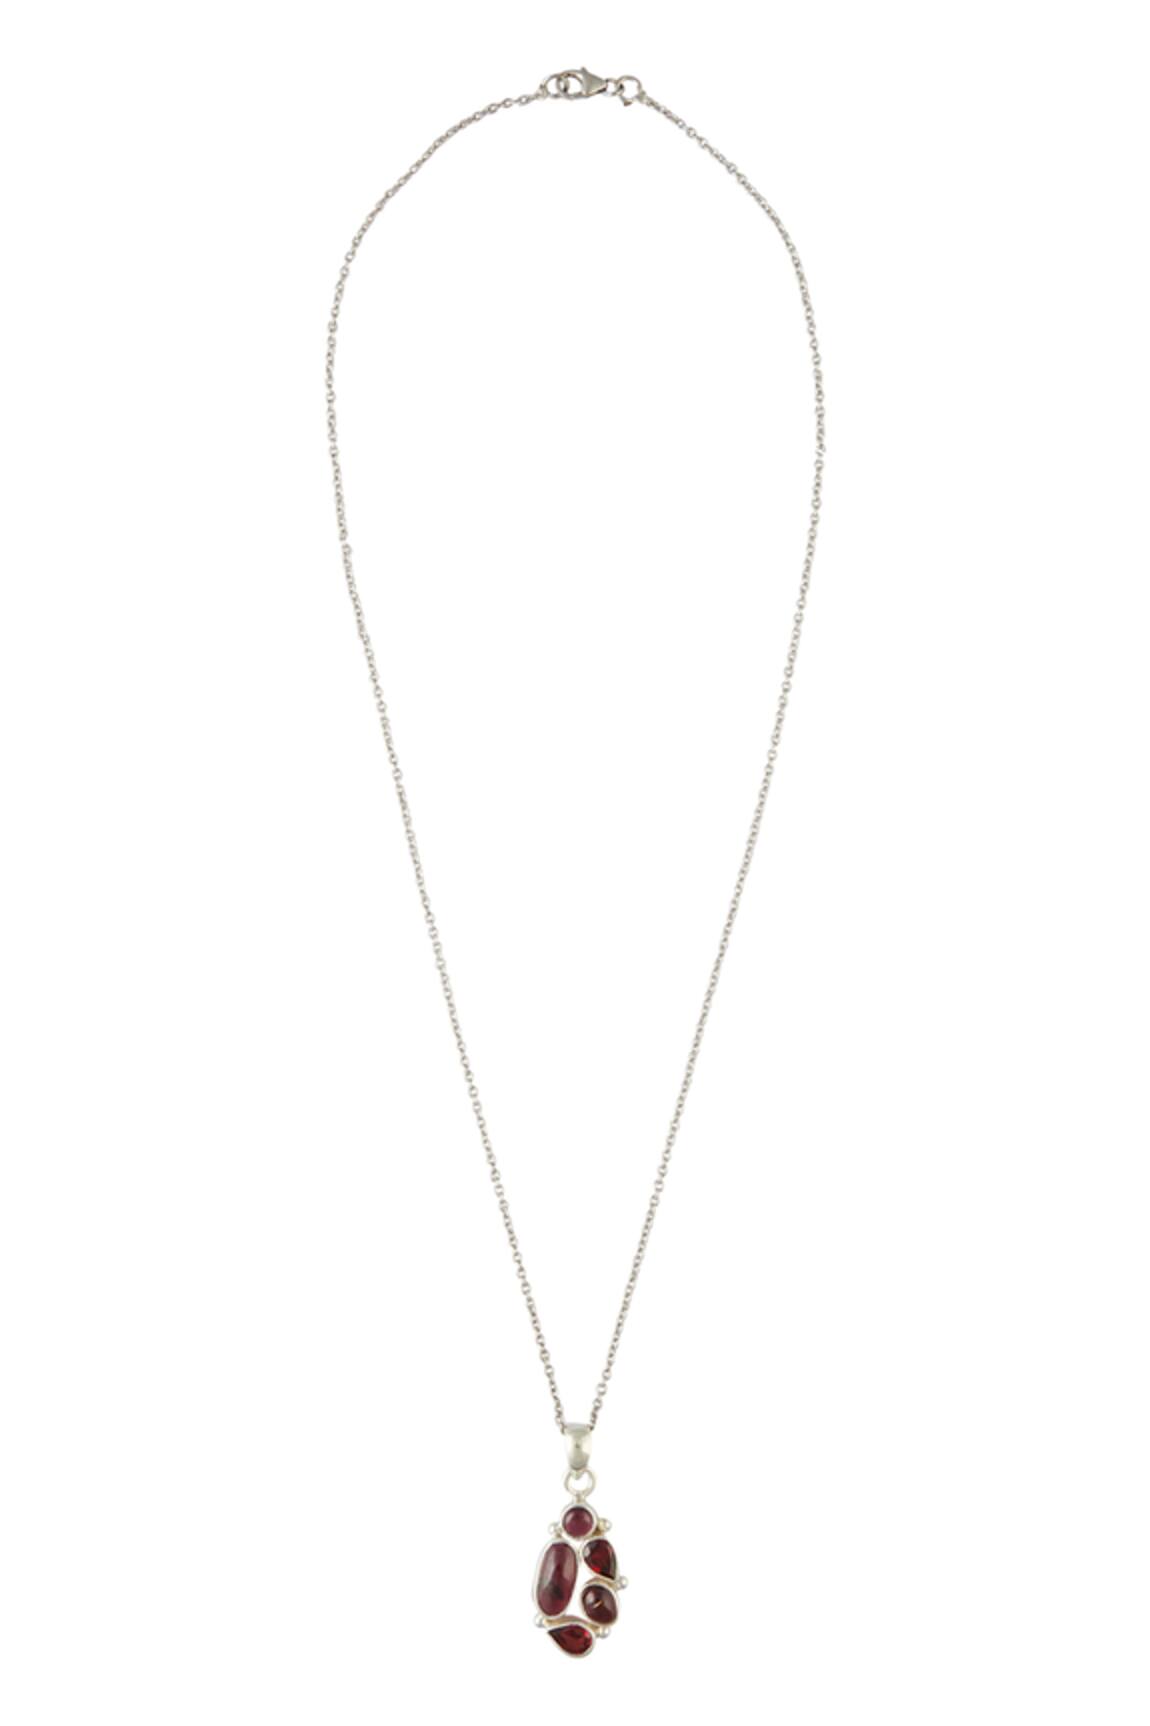 Star K � Open Heart Pendant Necklace with 6mm Heart Shaped Genuine Garnet  Stone - Walmart.com